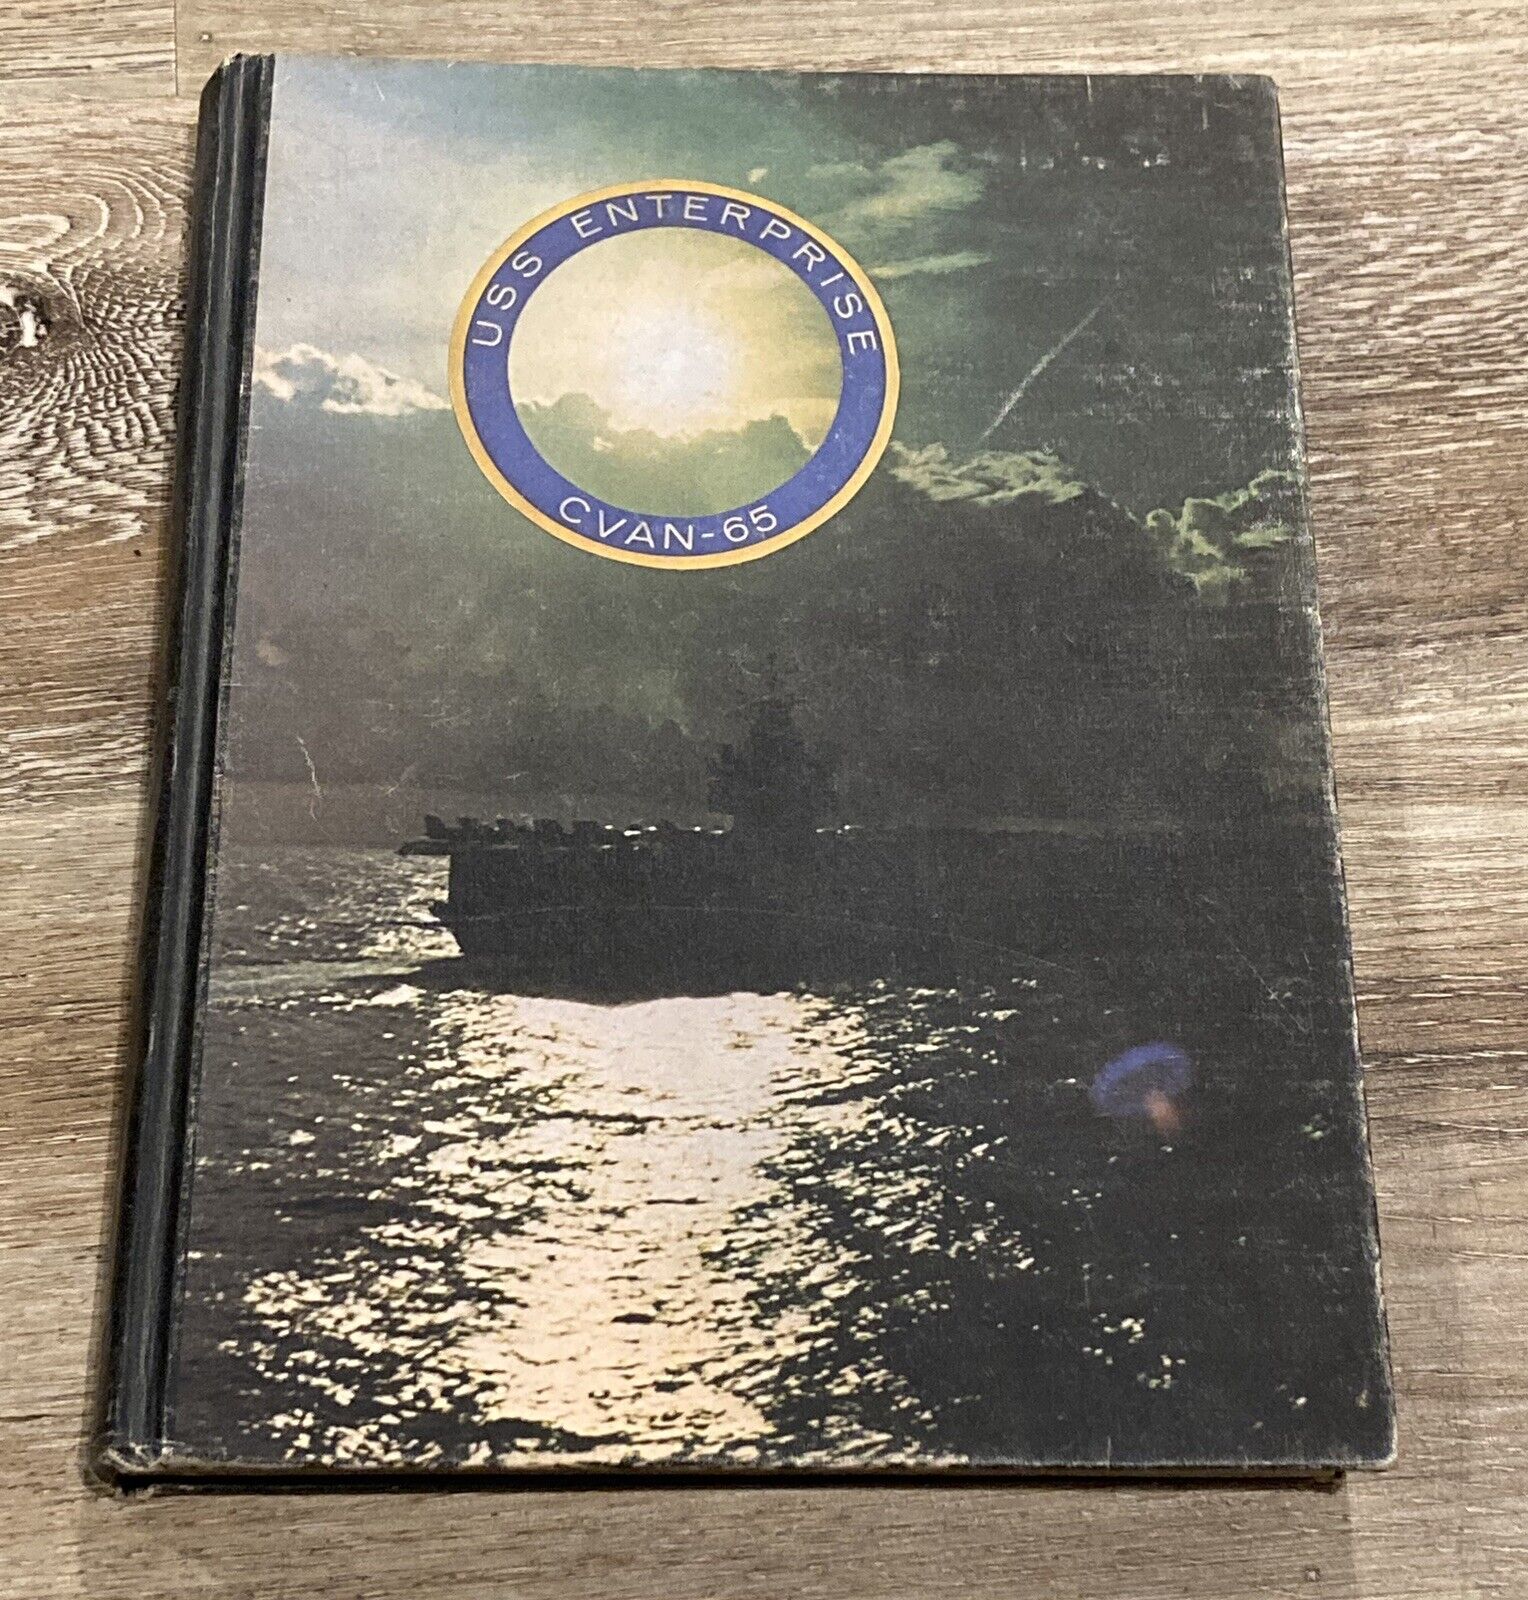 USS Enterprise (CVAN-65) 1974 1975 Westpac Deployment Cruise Book Yearbook